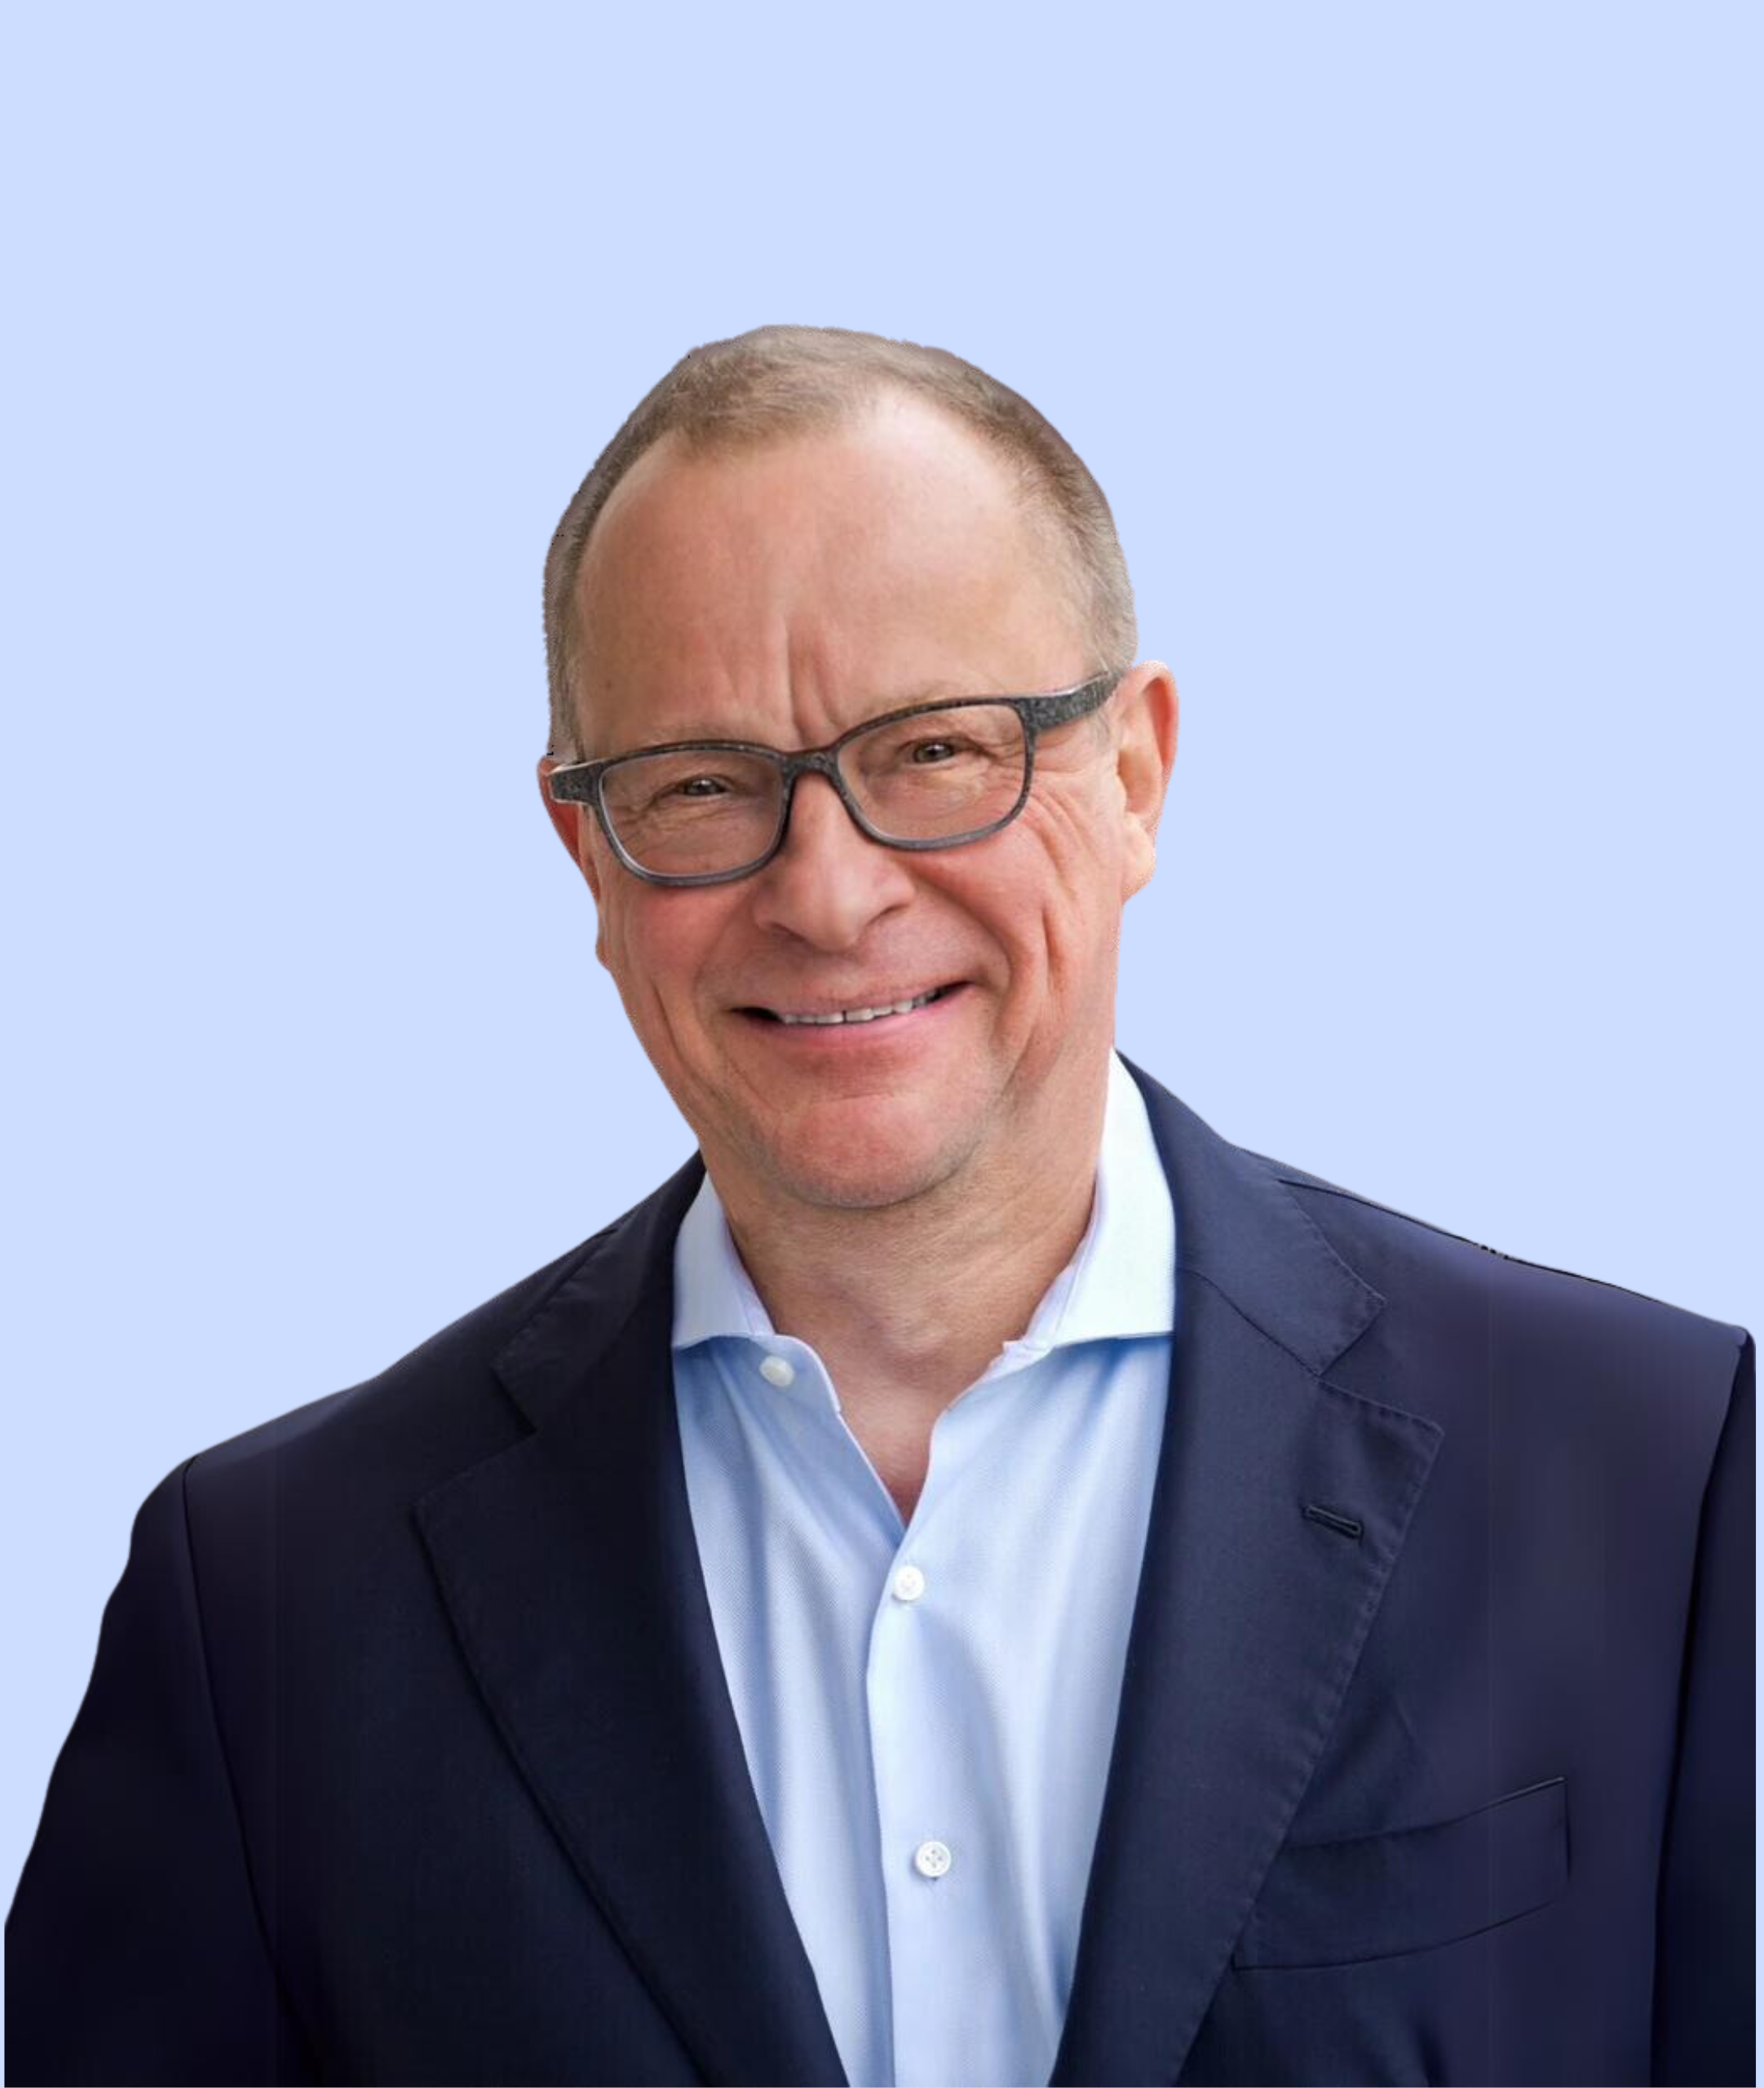 Michel Akkermans - Executive chairman of Yields